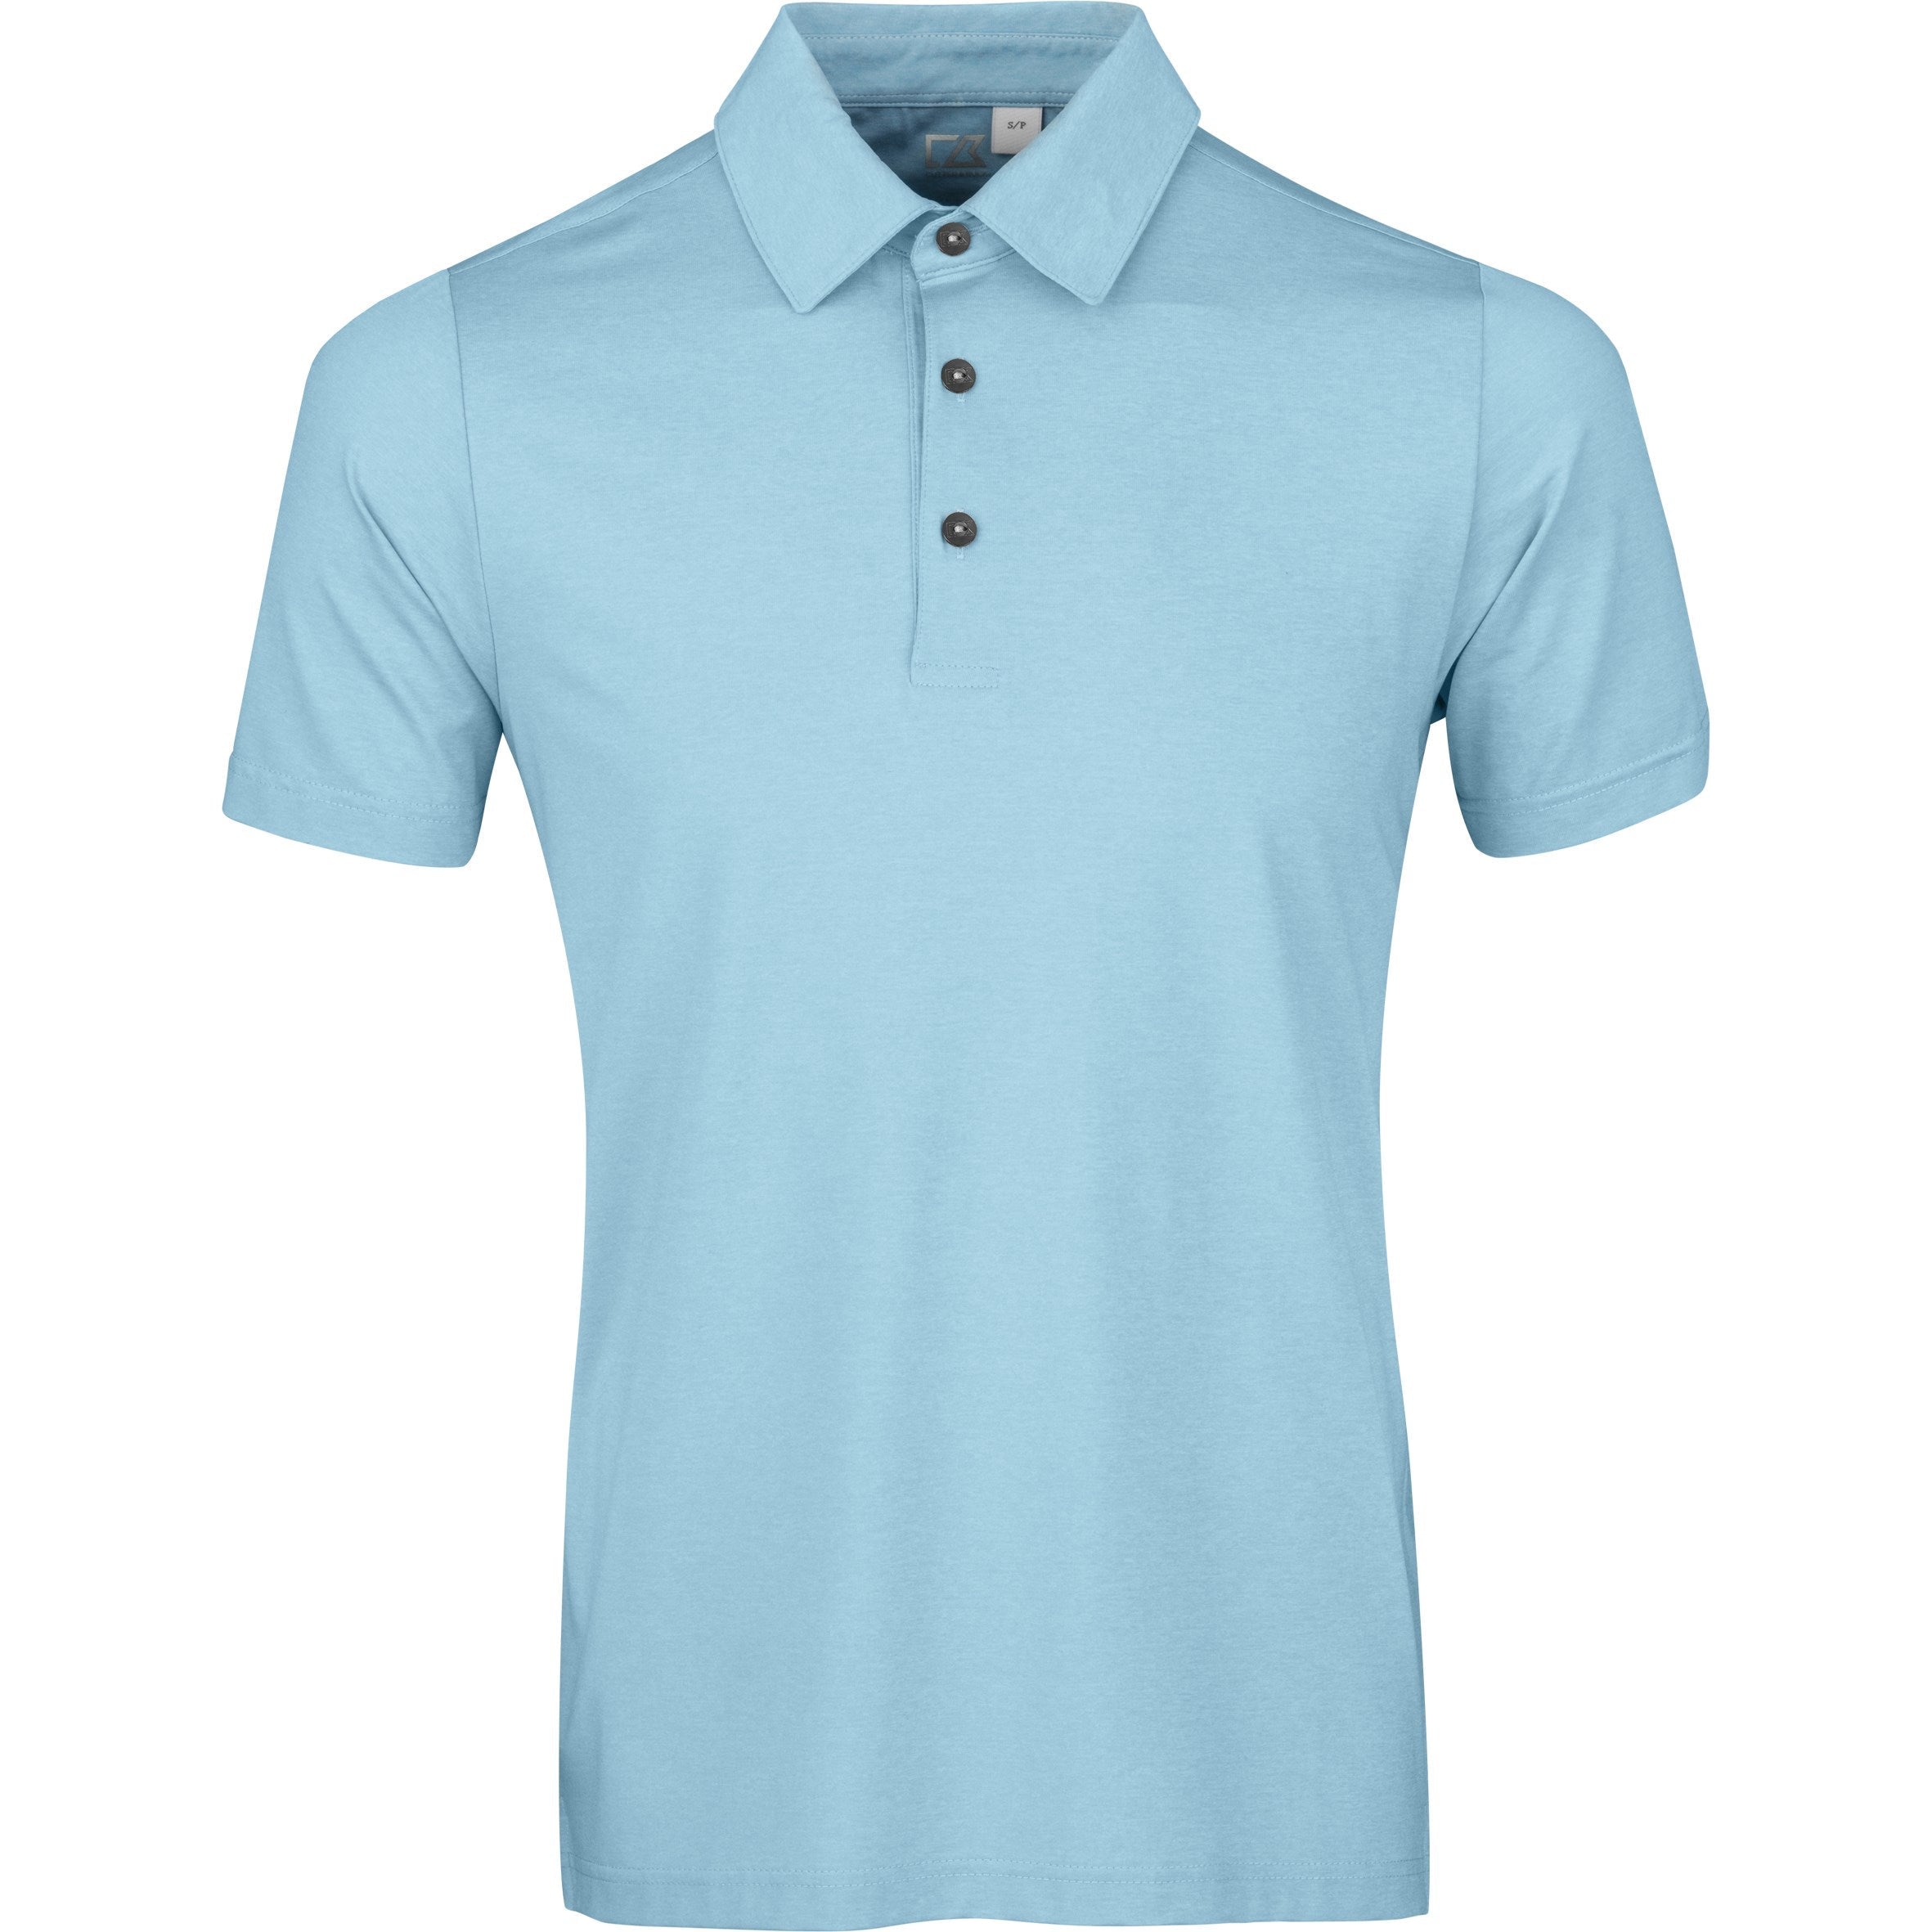 Mens Legacy Golf Shirt - Light Blue Only-2XL-Light Blue-LB